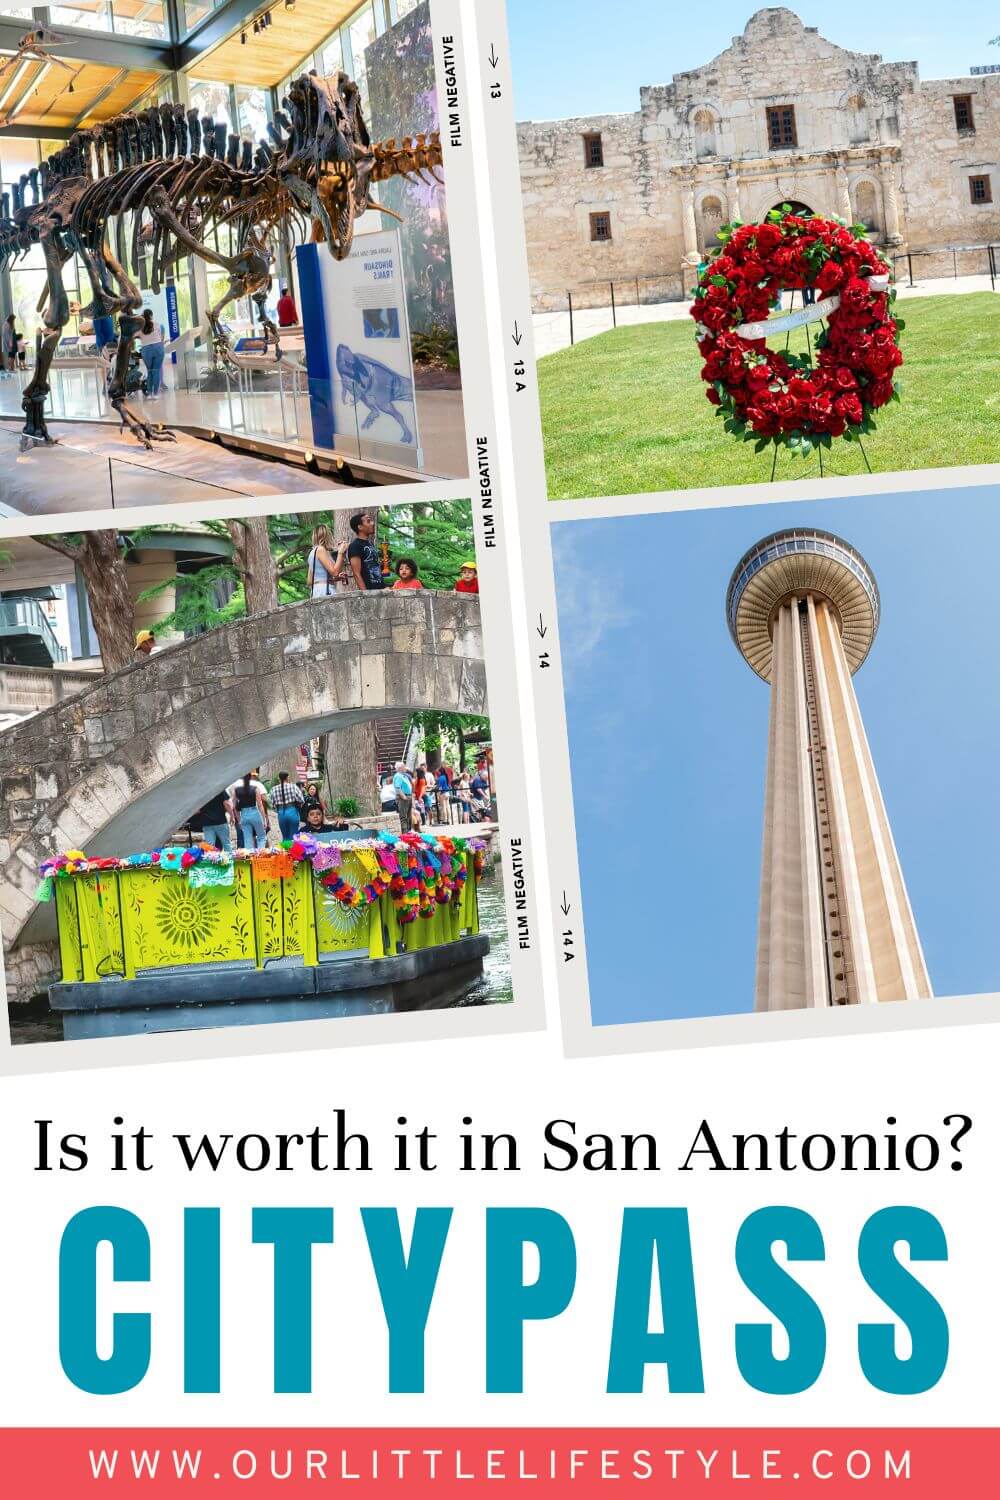 City Pass San Antonio Travel Blog Review